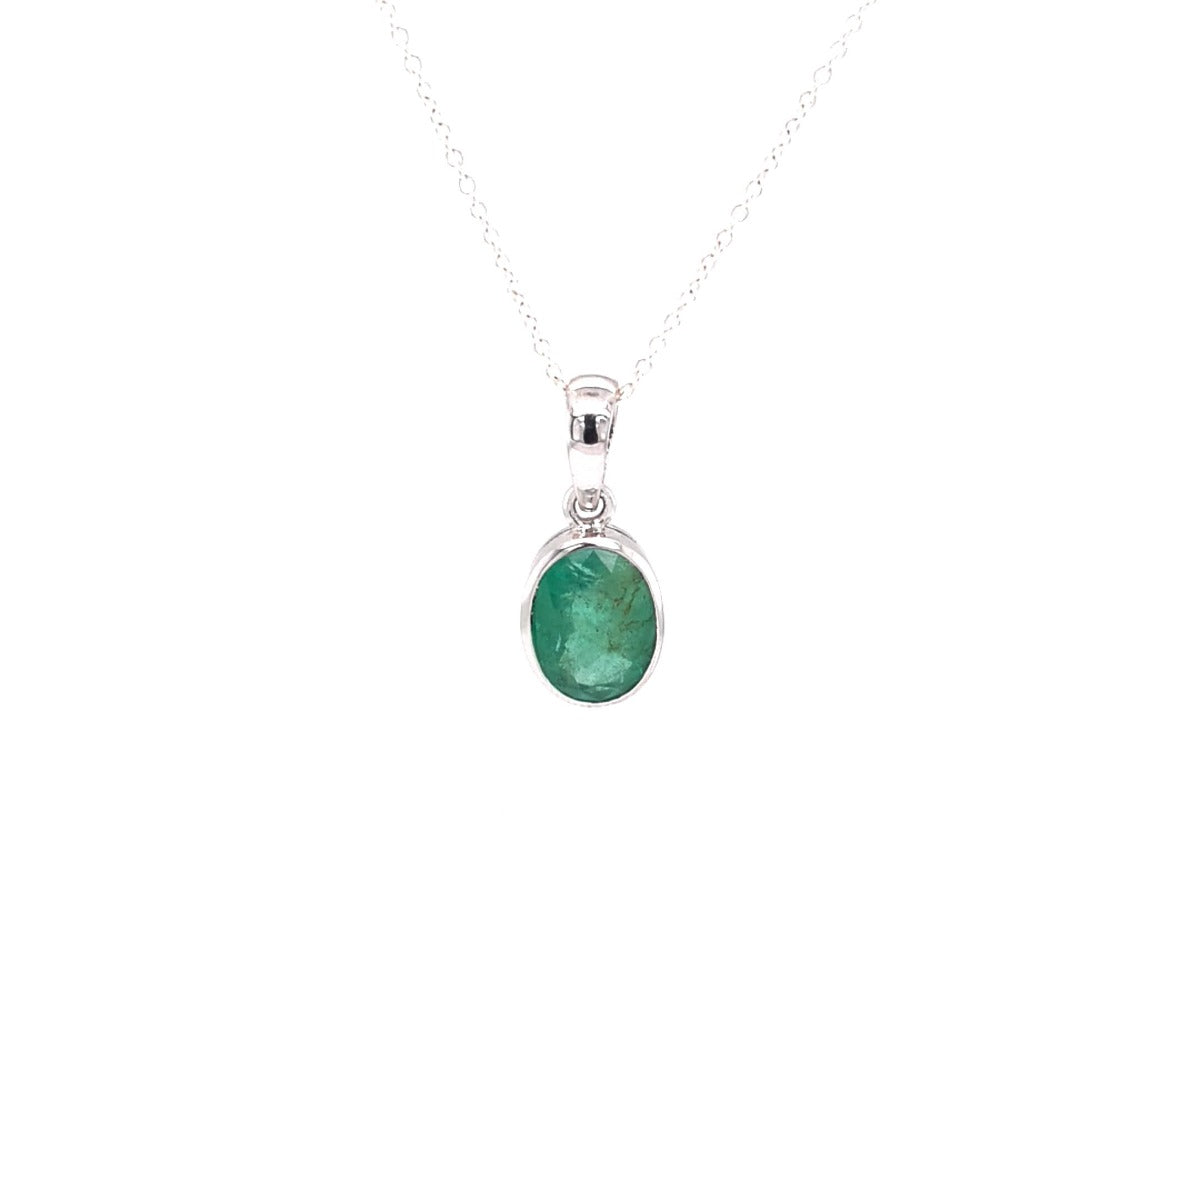 Stunning emerald  pendant